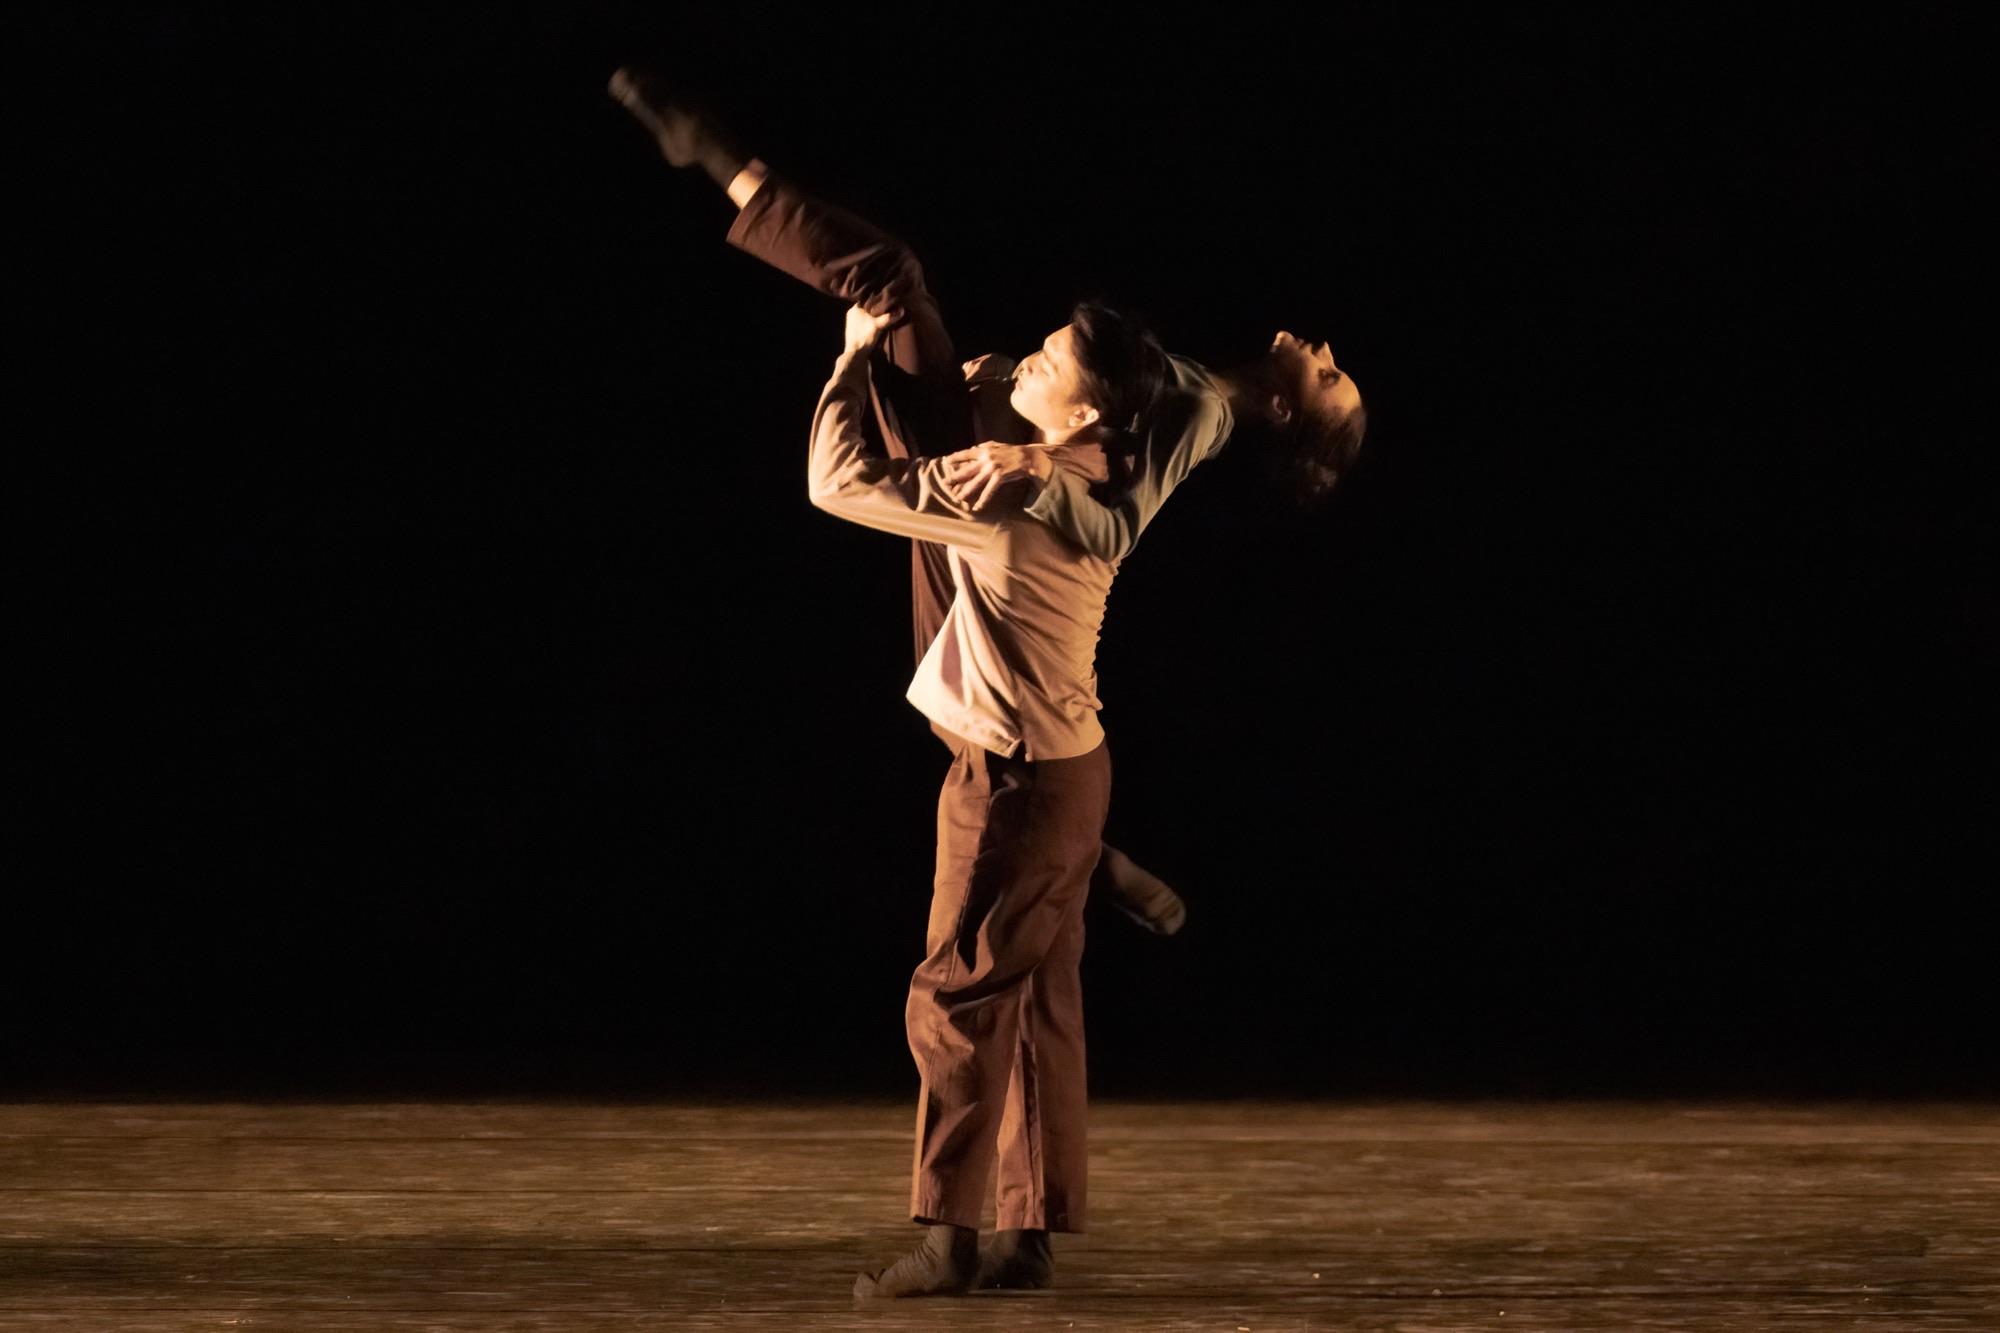 Daichi Ikarashi and Viola Pantuso in Things Left Unsaid. Photo by Karolina Kuras. Courtesy of The National Ballet of Canada.